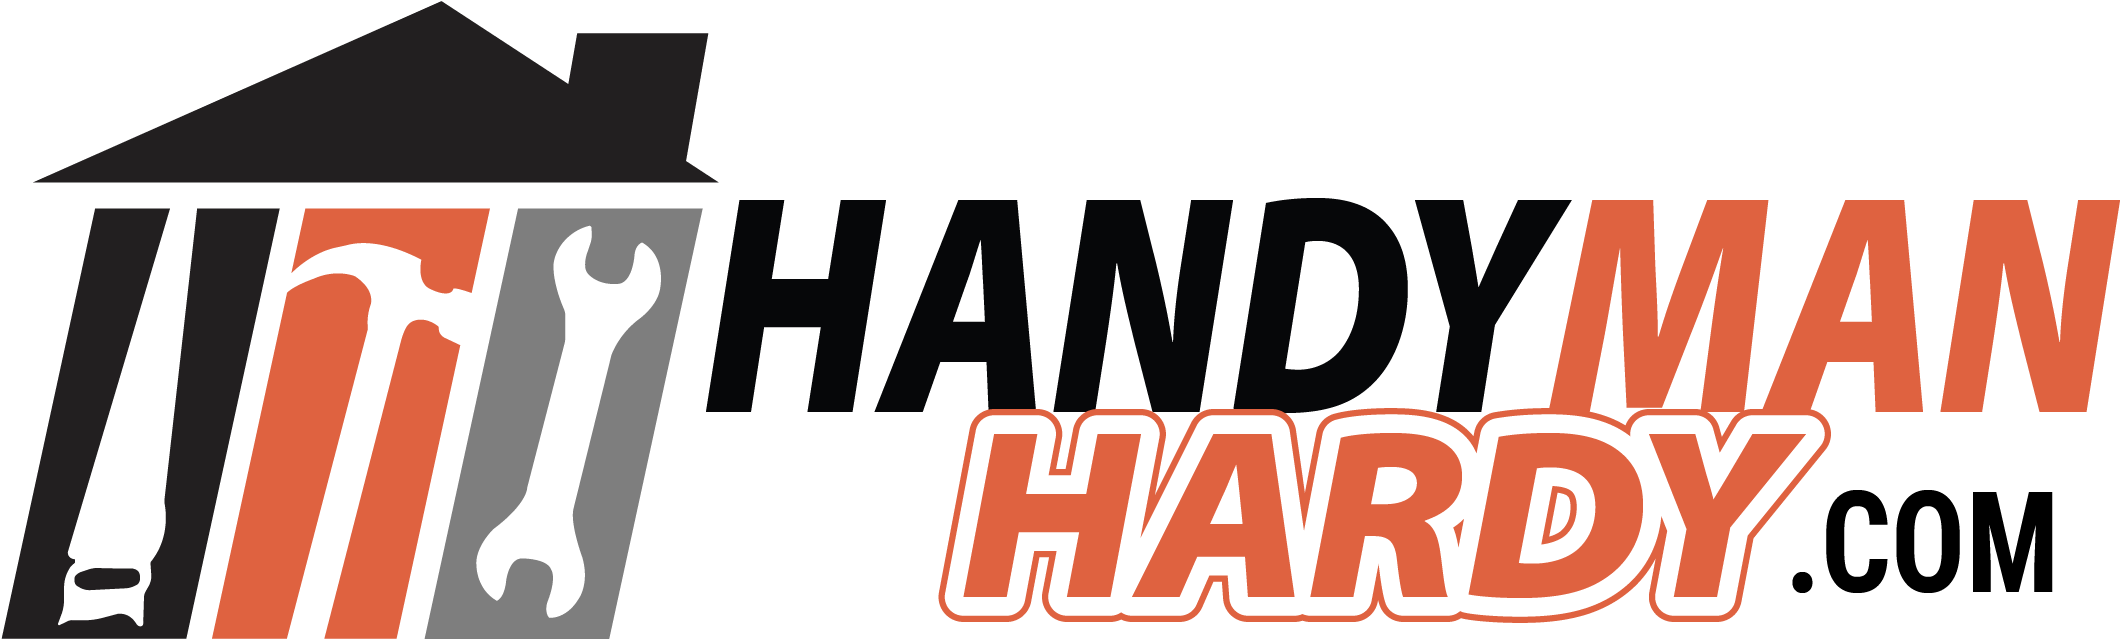 Handyman Hardy Logo PNG